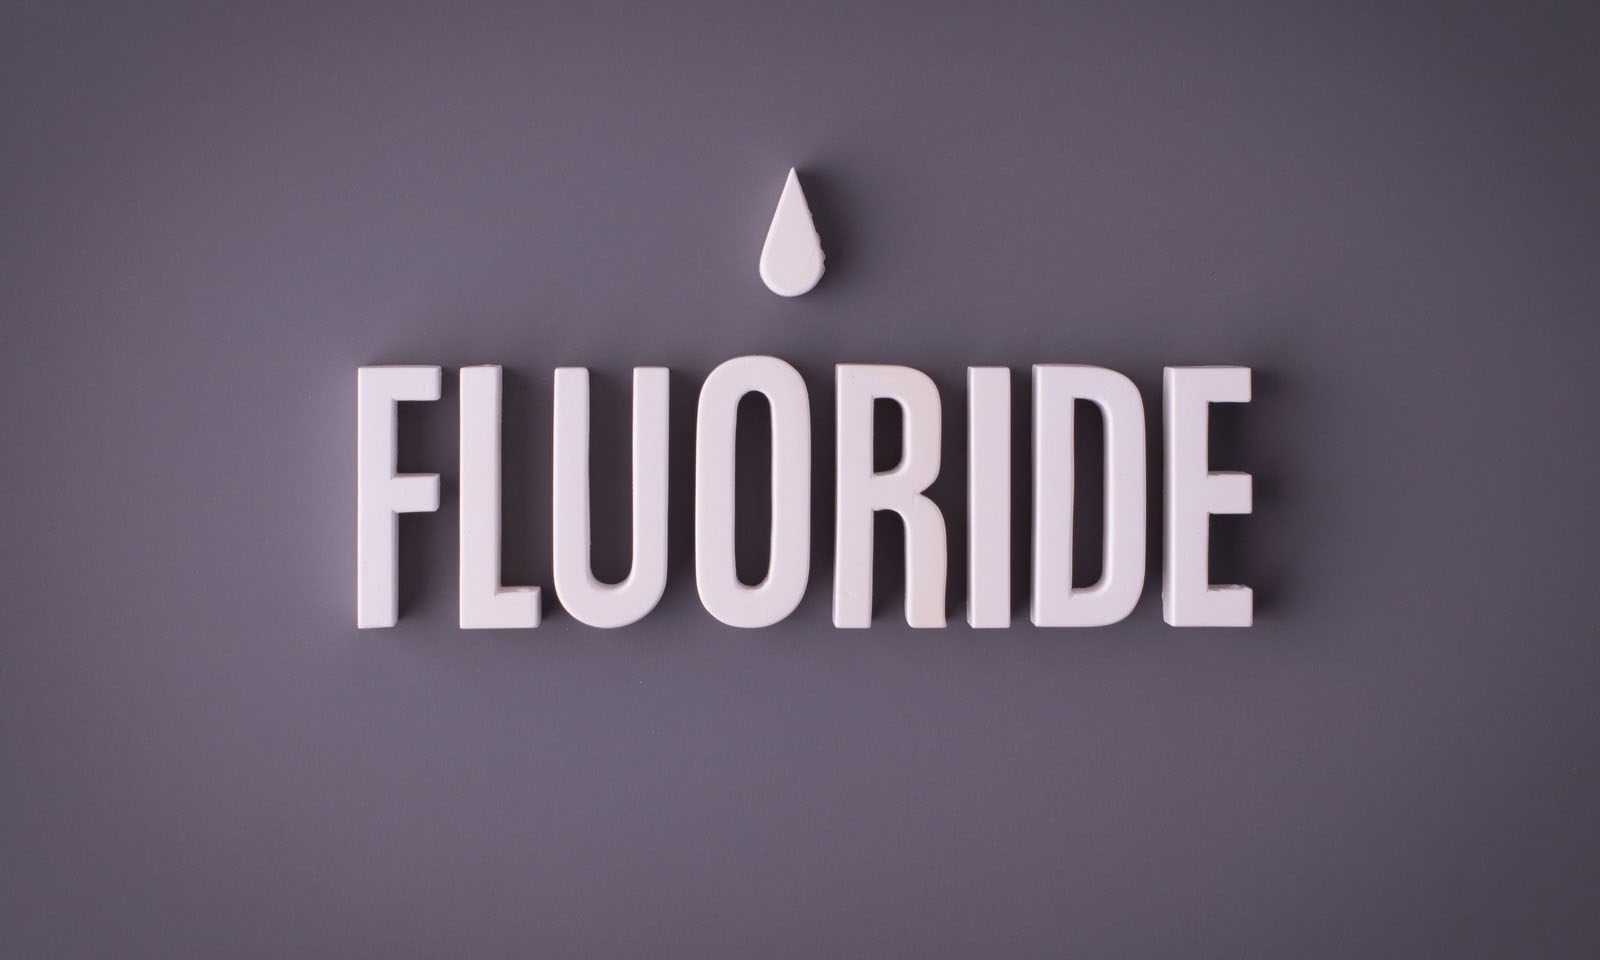 fluoride deception image